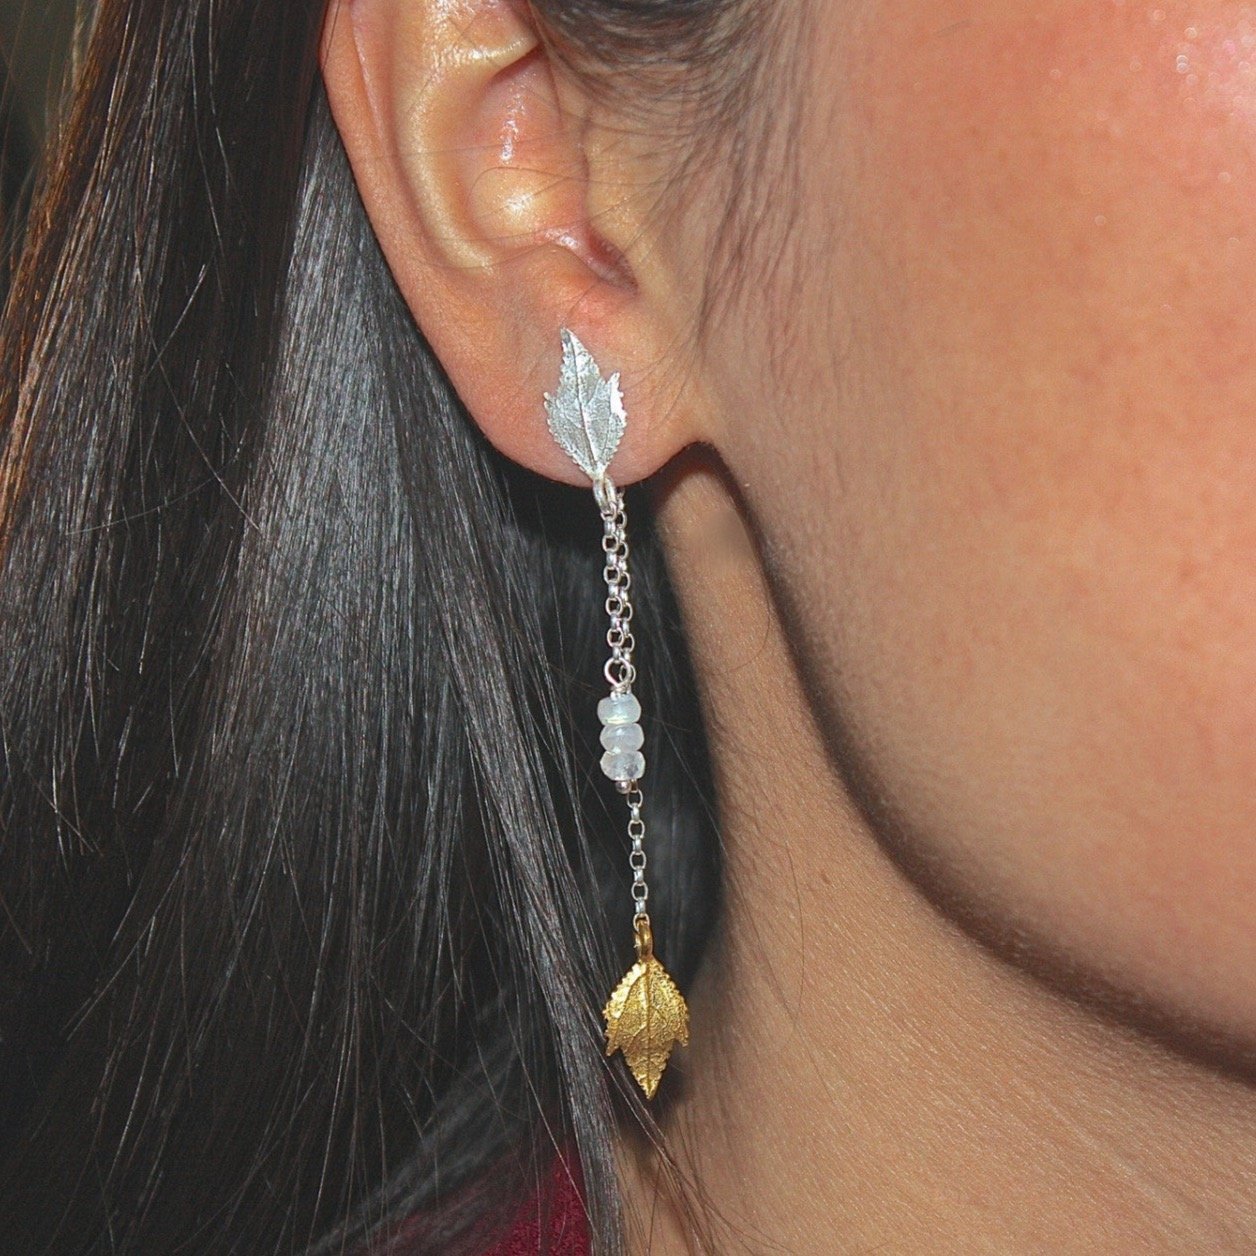 Tumbling Leaf Dangle Earrings, Asymetric, mixed metal earrings